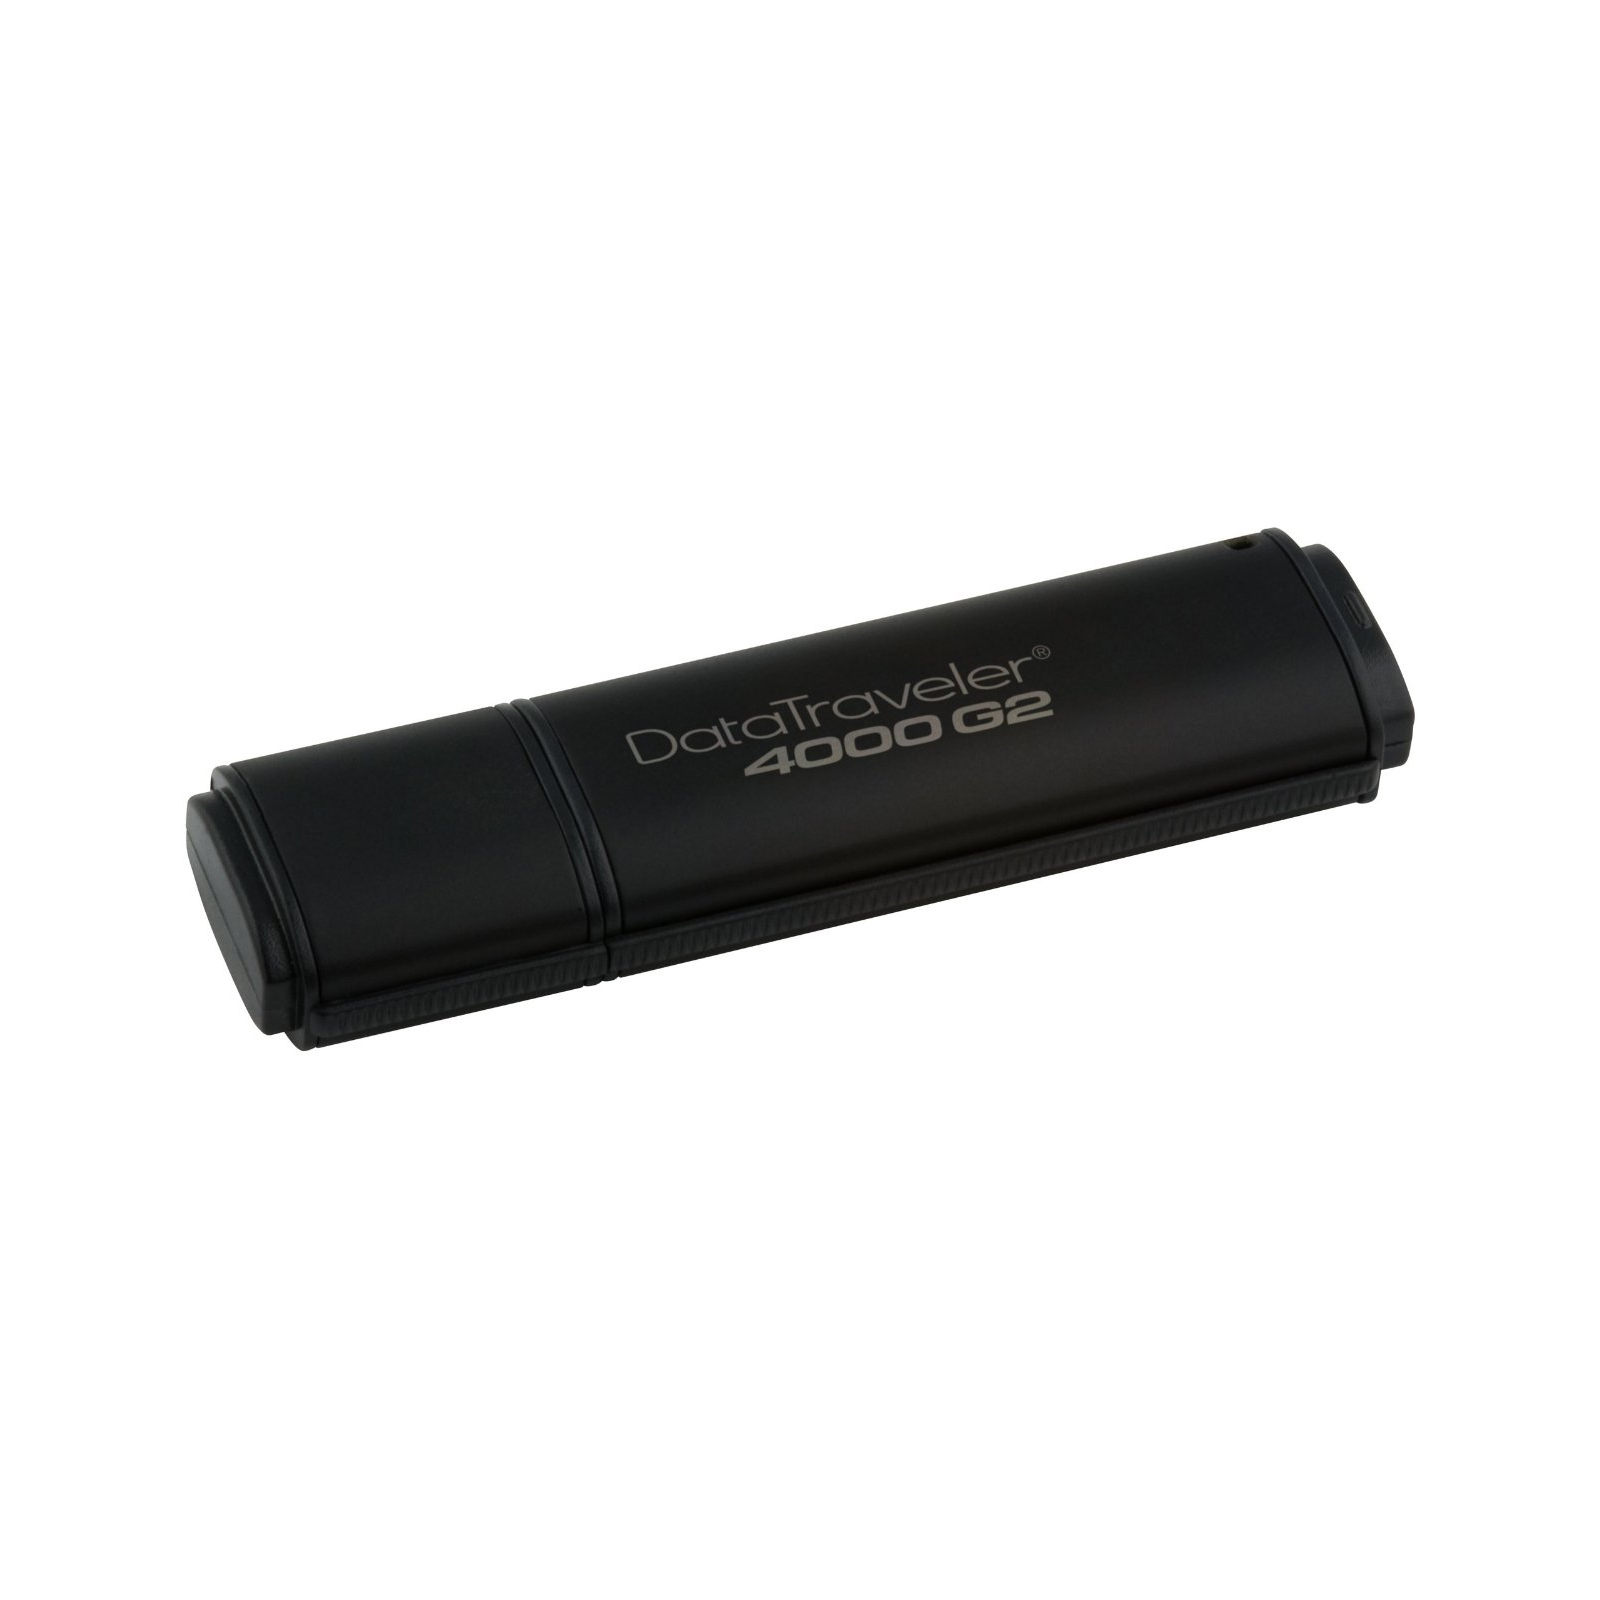 USB флеш накопитель Kingston 32GB DataTraveler 4000 G2 Metal Black USB 3.0 (DT4000G2/32GB) изображение 3